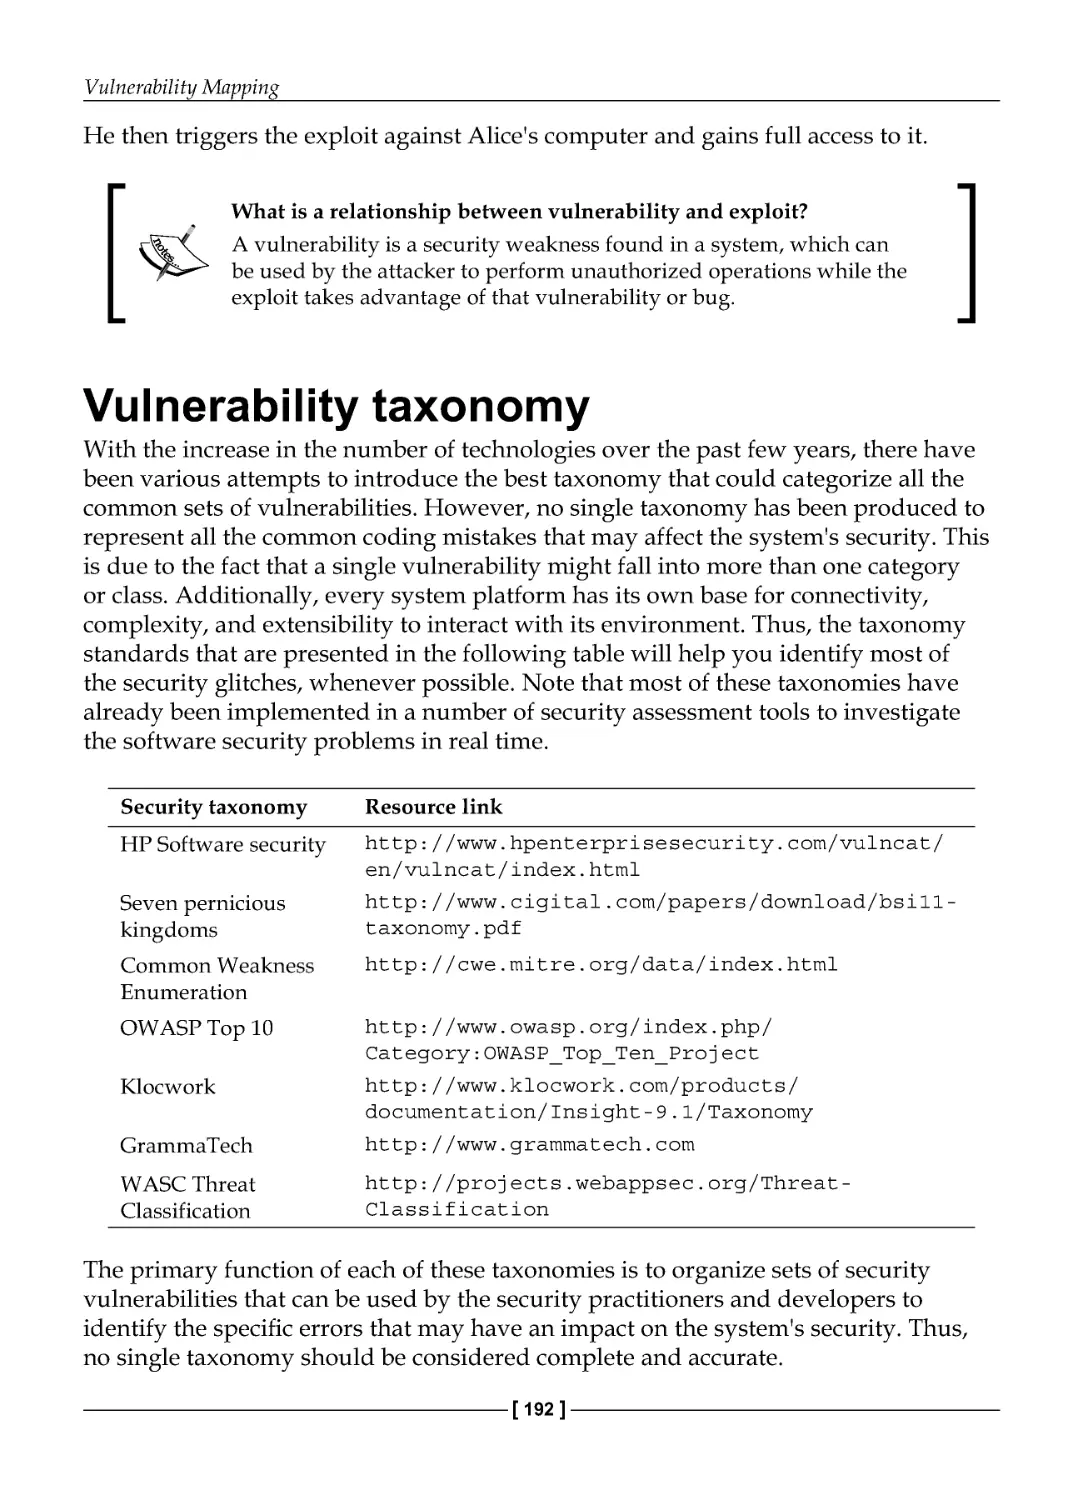 Vulnerability taxonomy